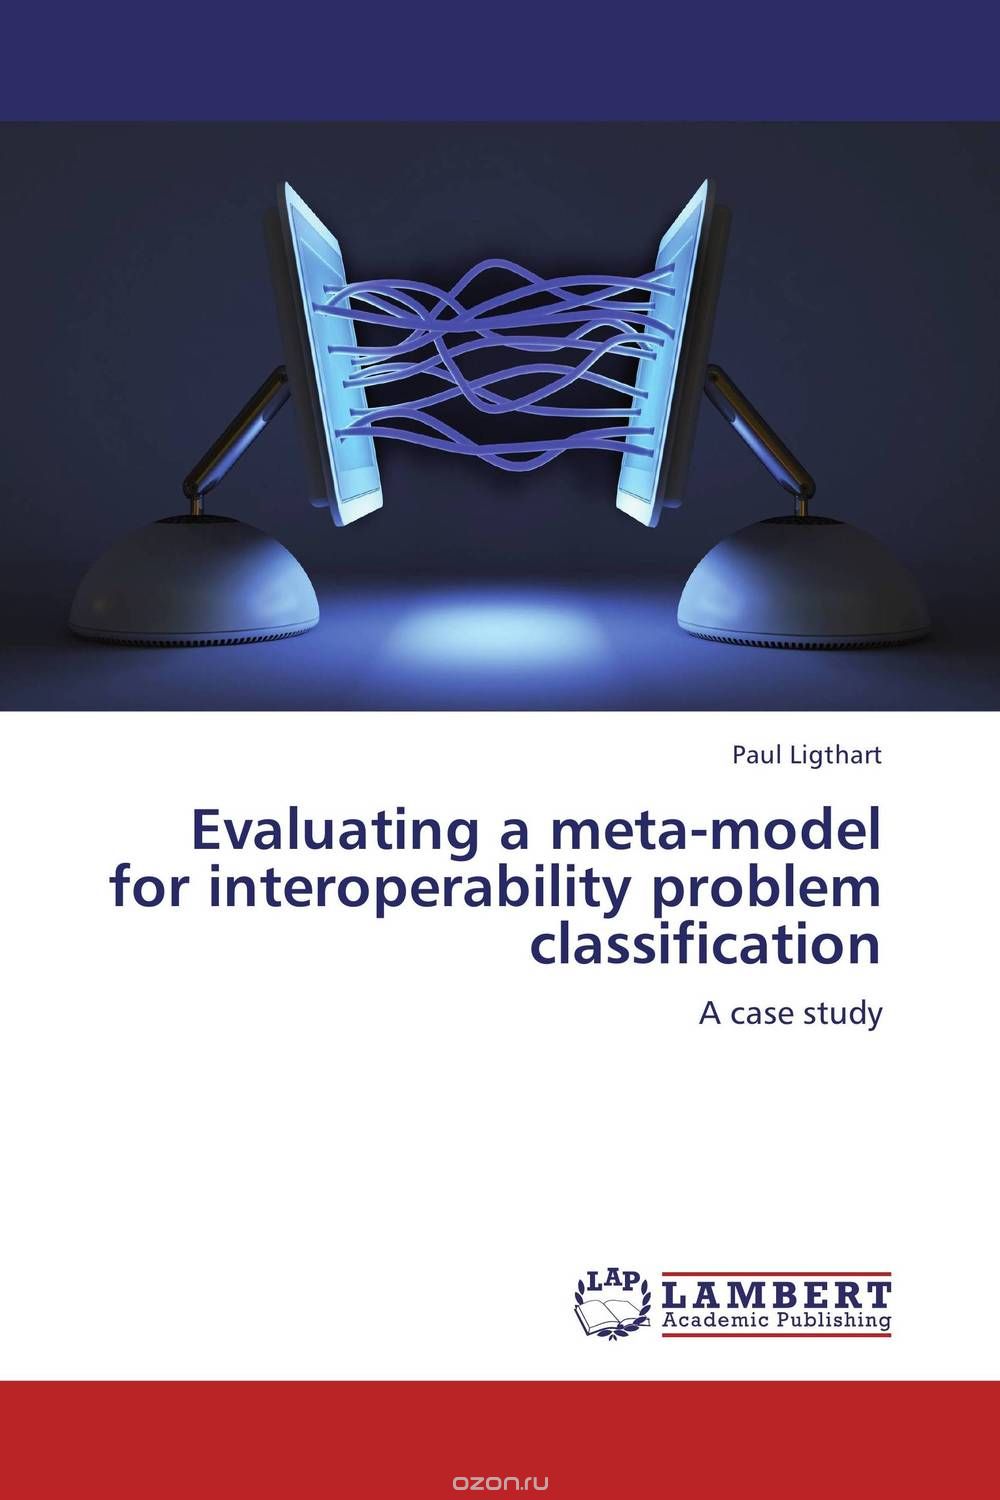 Скачать книгу "Evaluating a meta-model for interoperability problem classification"